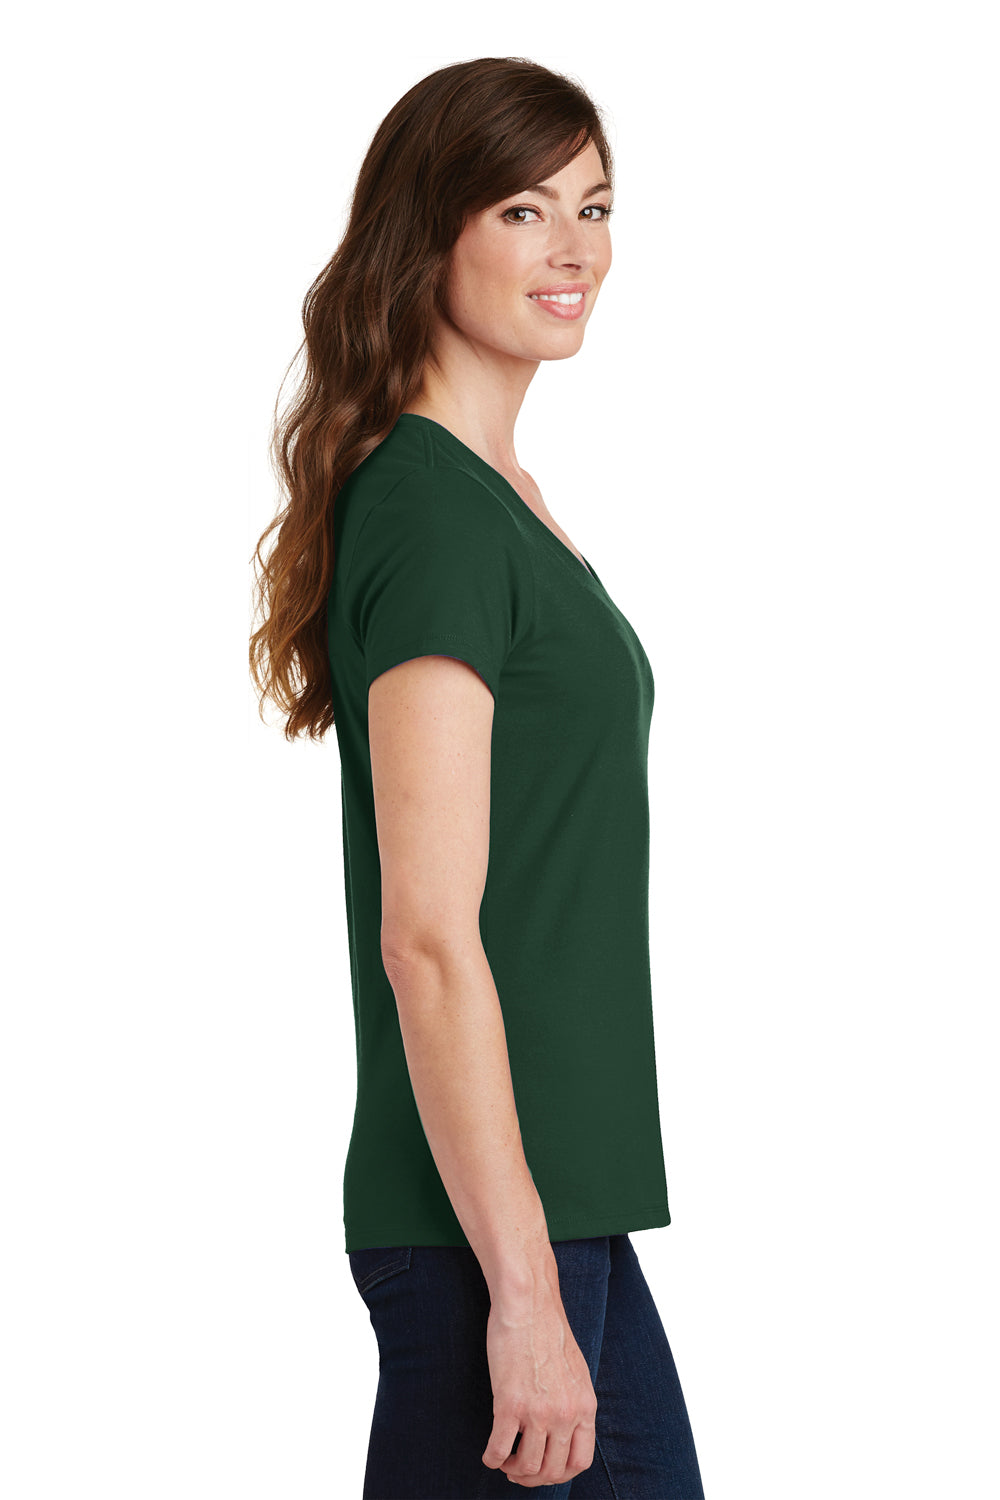 Port & Company LPC450V Womens Fan Favorite Short Sleeve V-Neck T-Shirt Forest Green Side